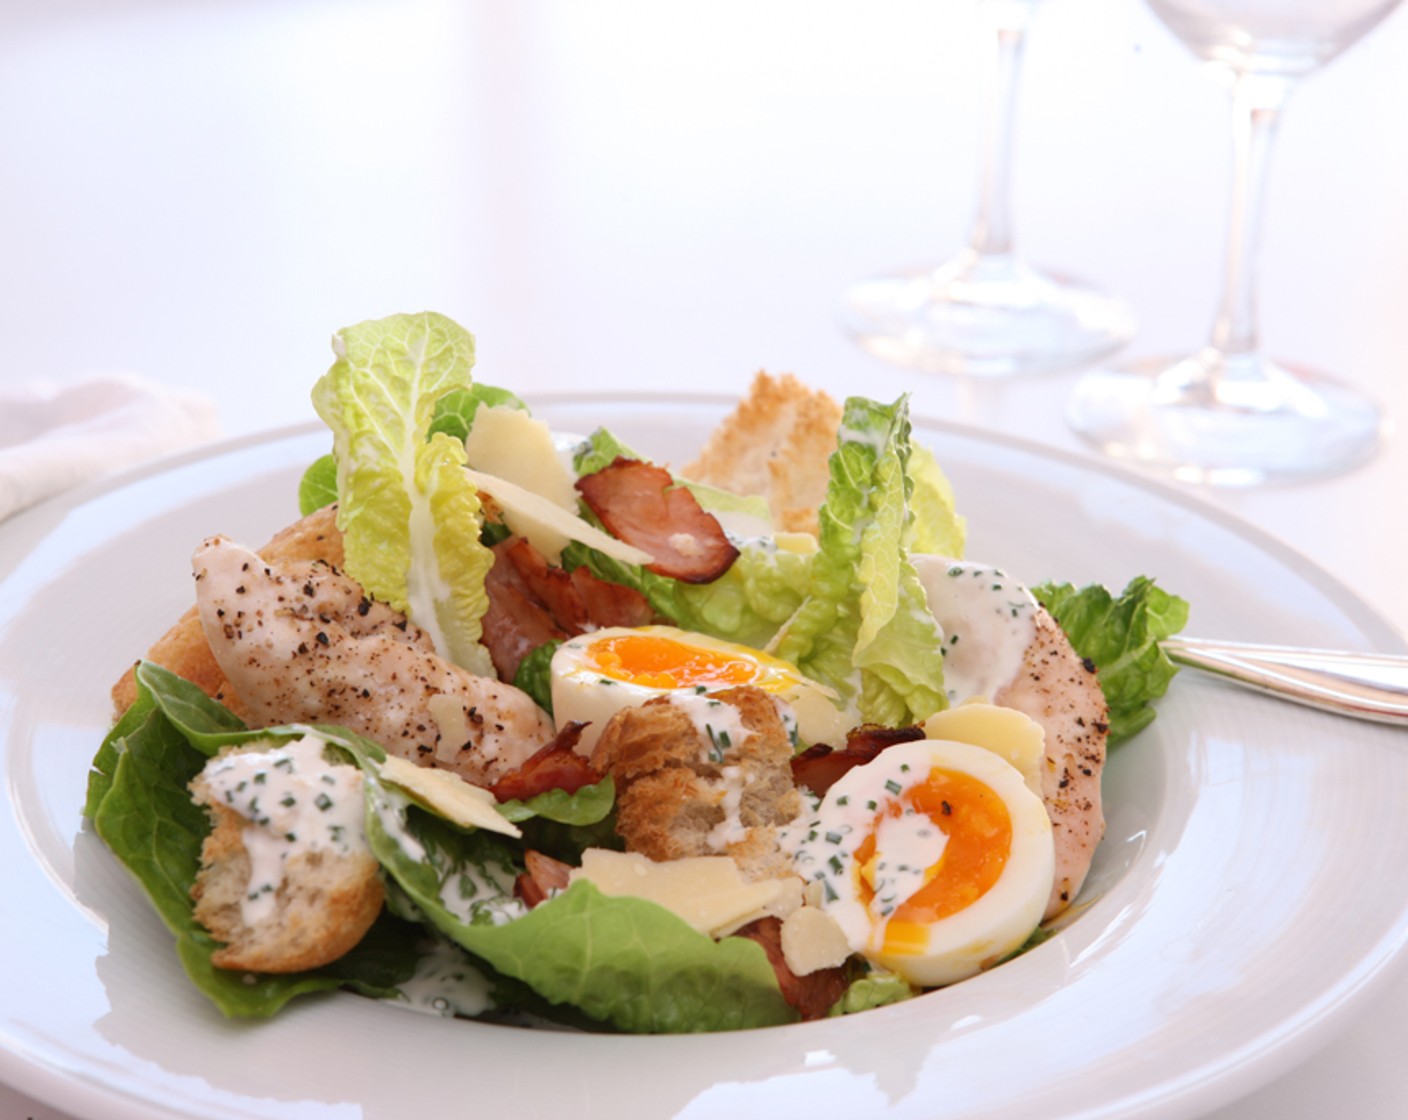 Caesar Salad mit Poulet